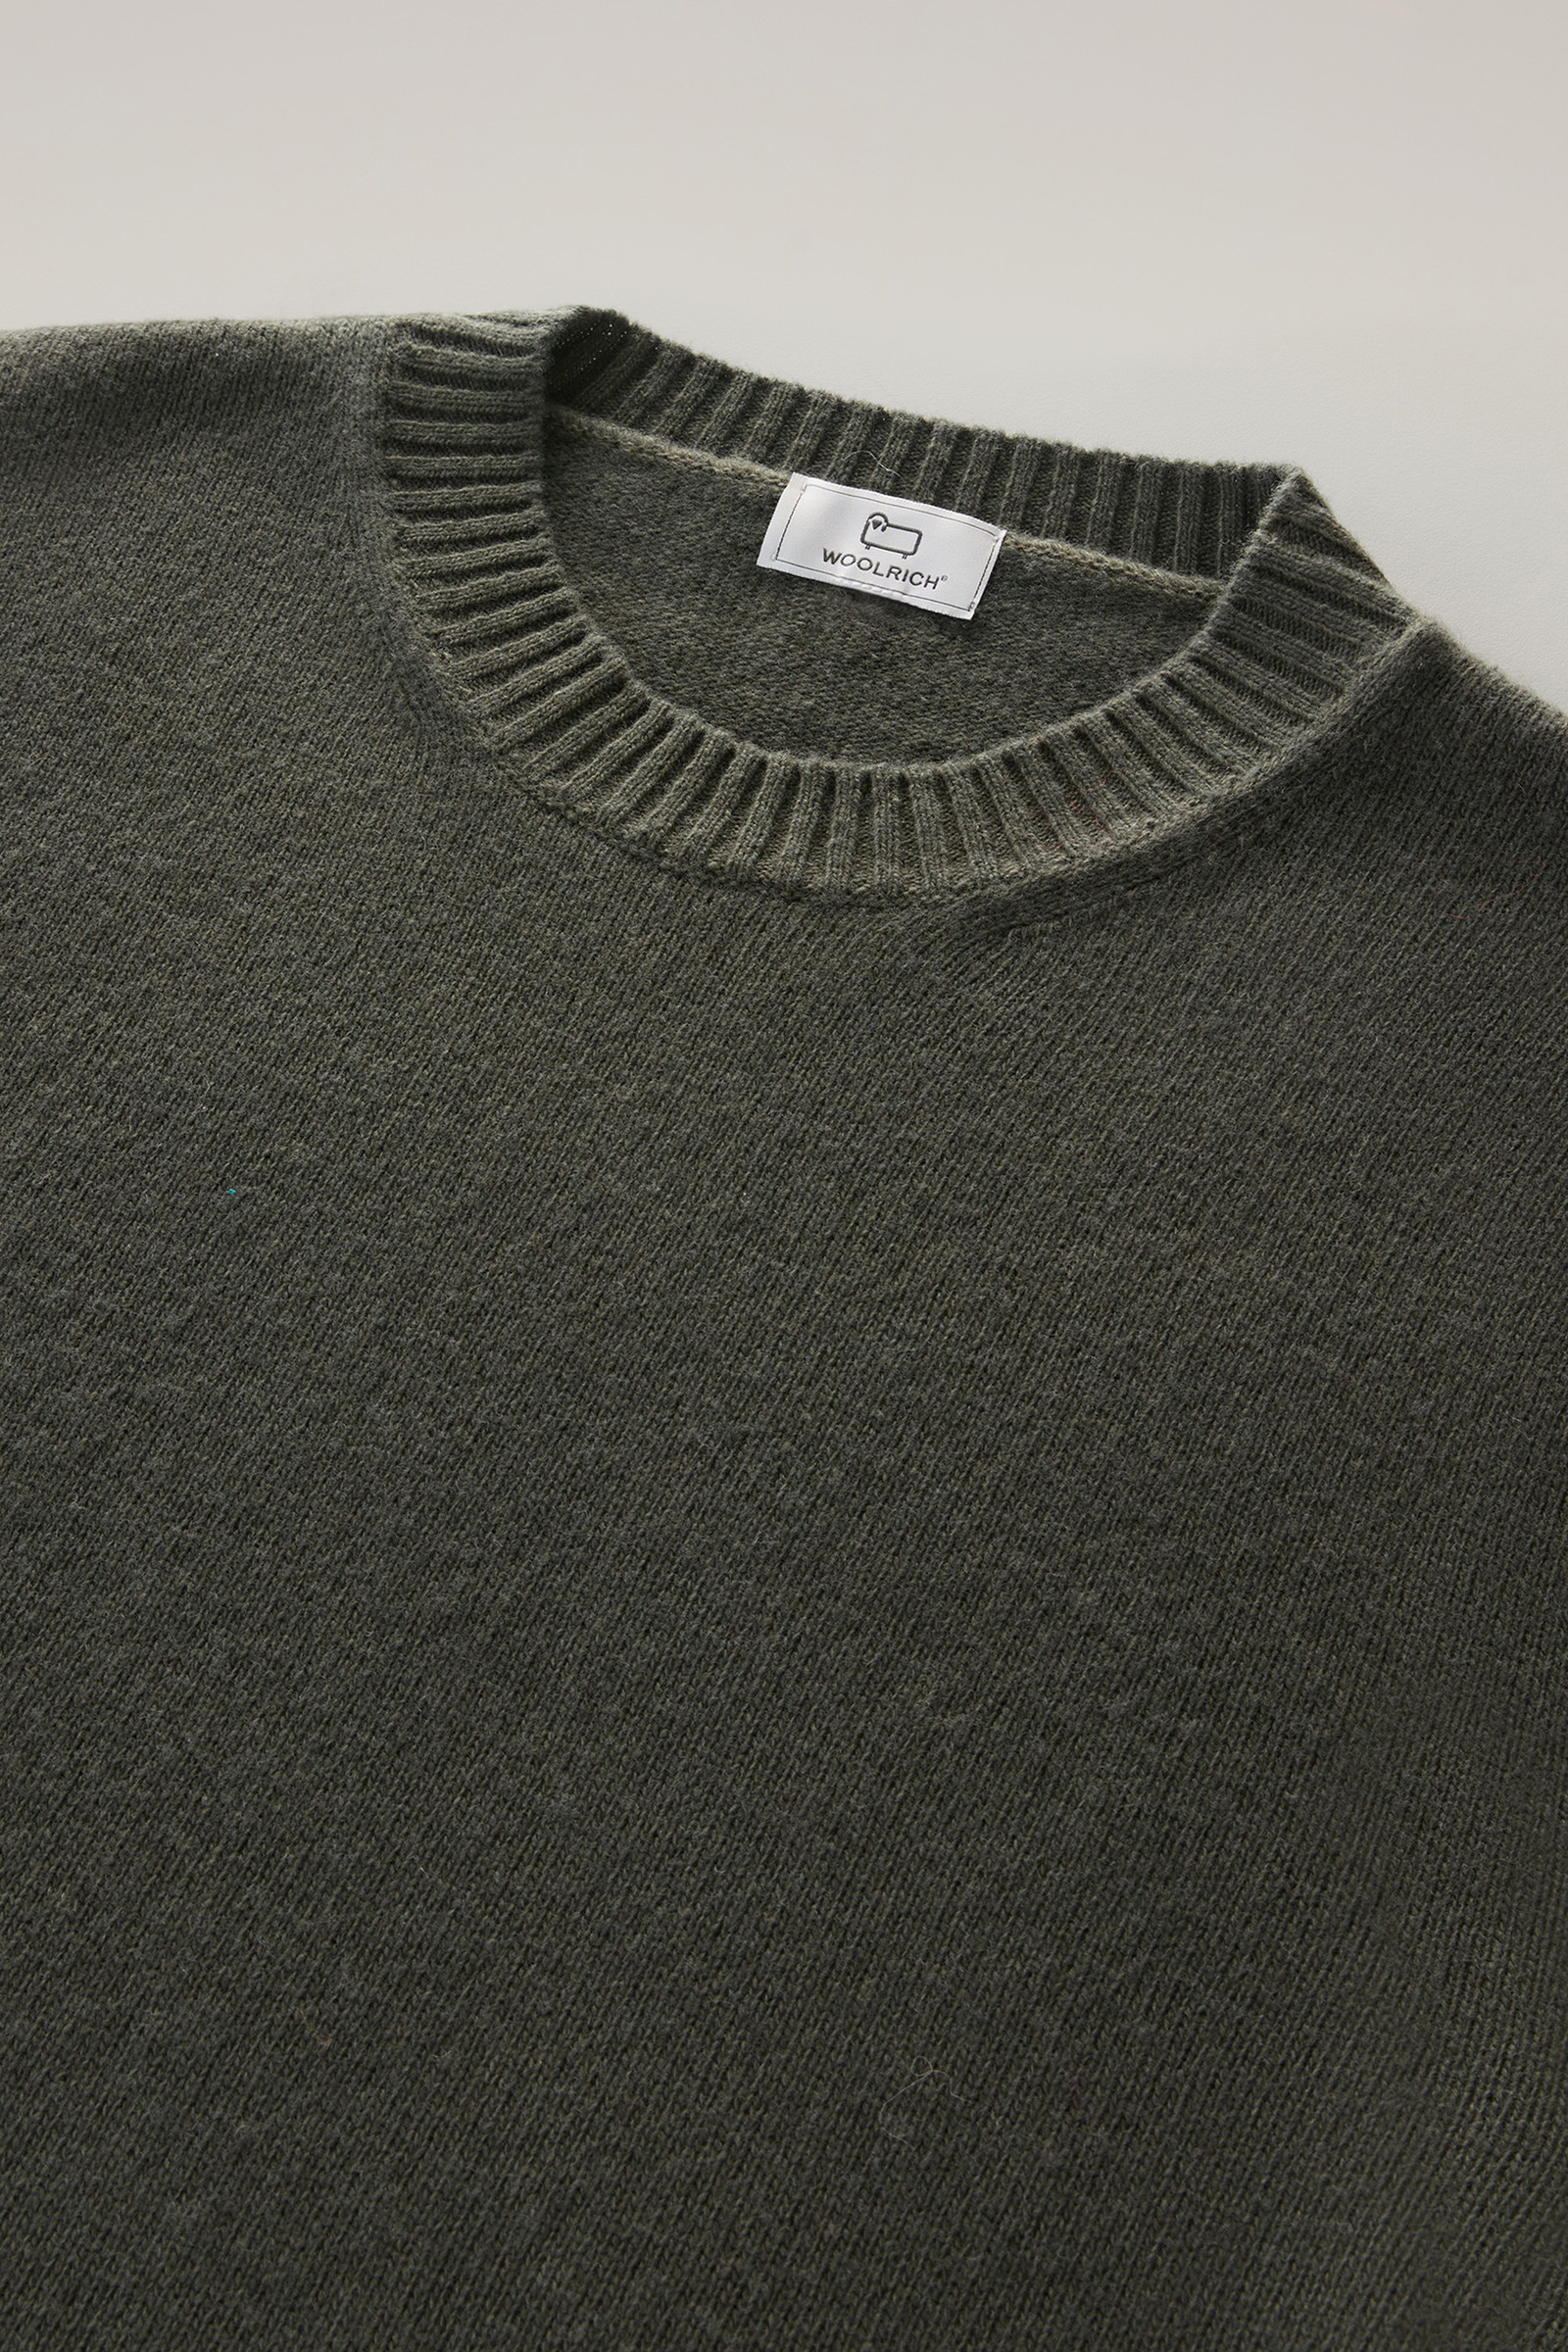 Men's Garment-dyed Crewneck in Pure Virgin Wool Green | Woolrich USA